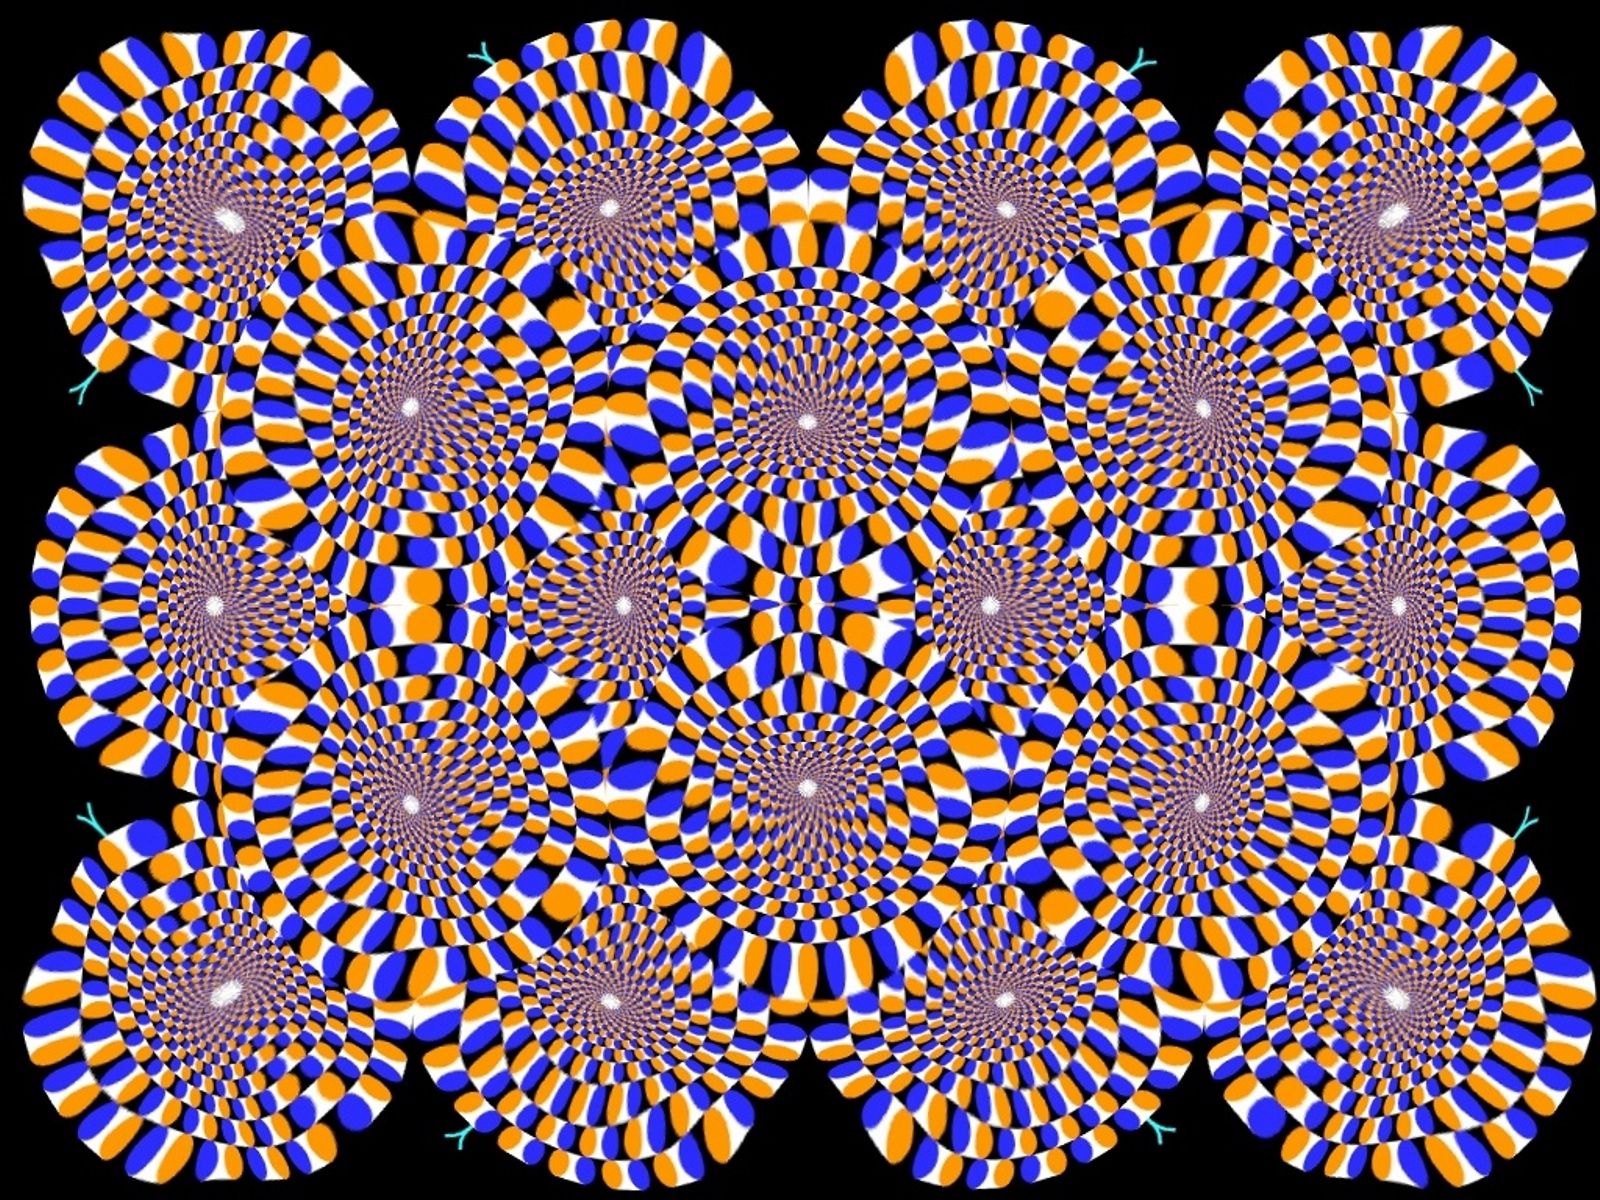 optical illusion, abstract, circles, rotation, immersion